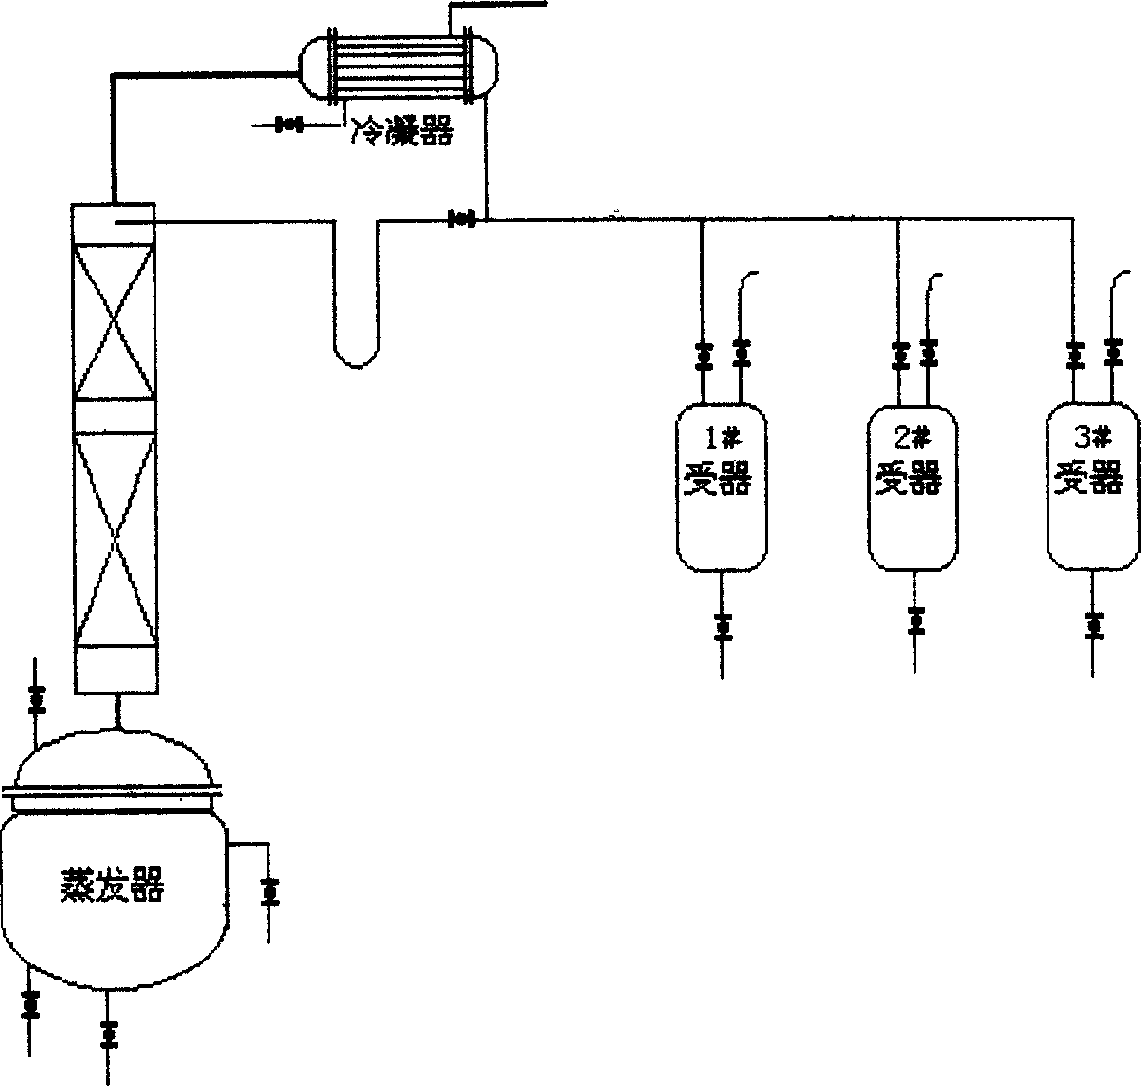 Prepn process of p-bromofluoro benzene